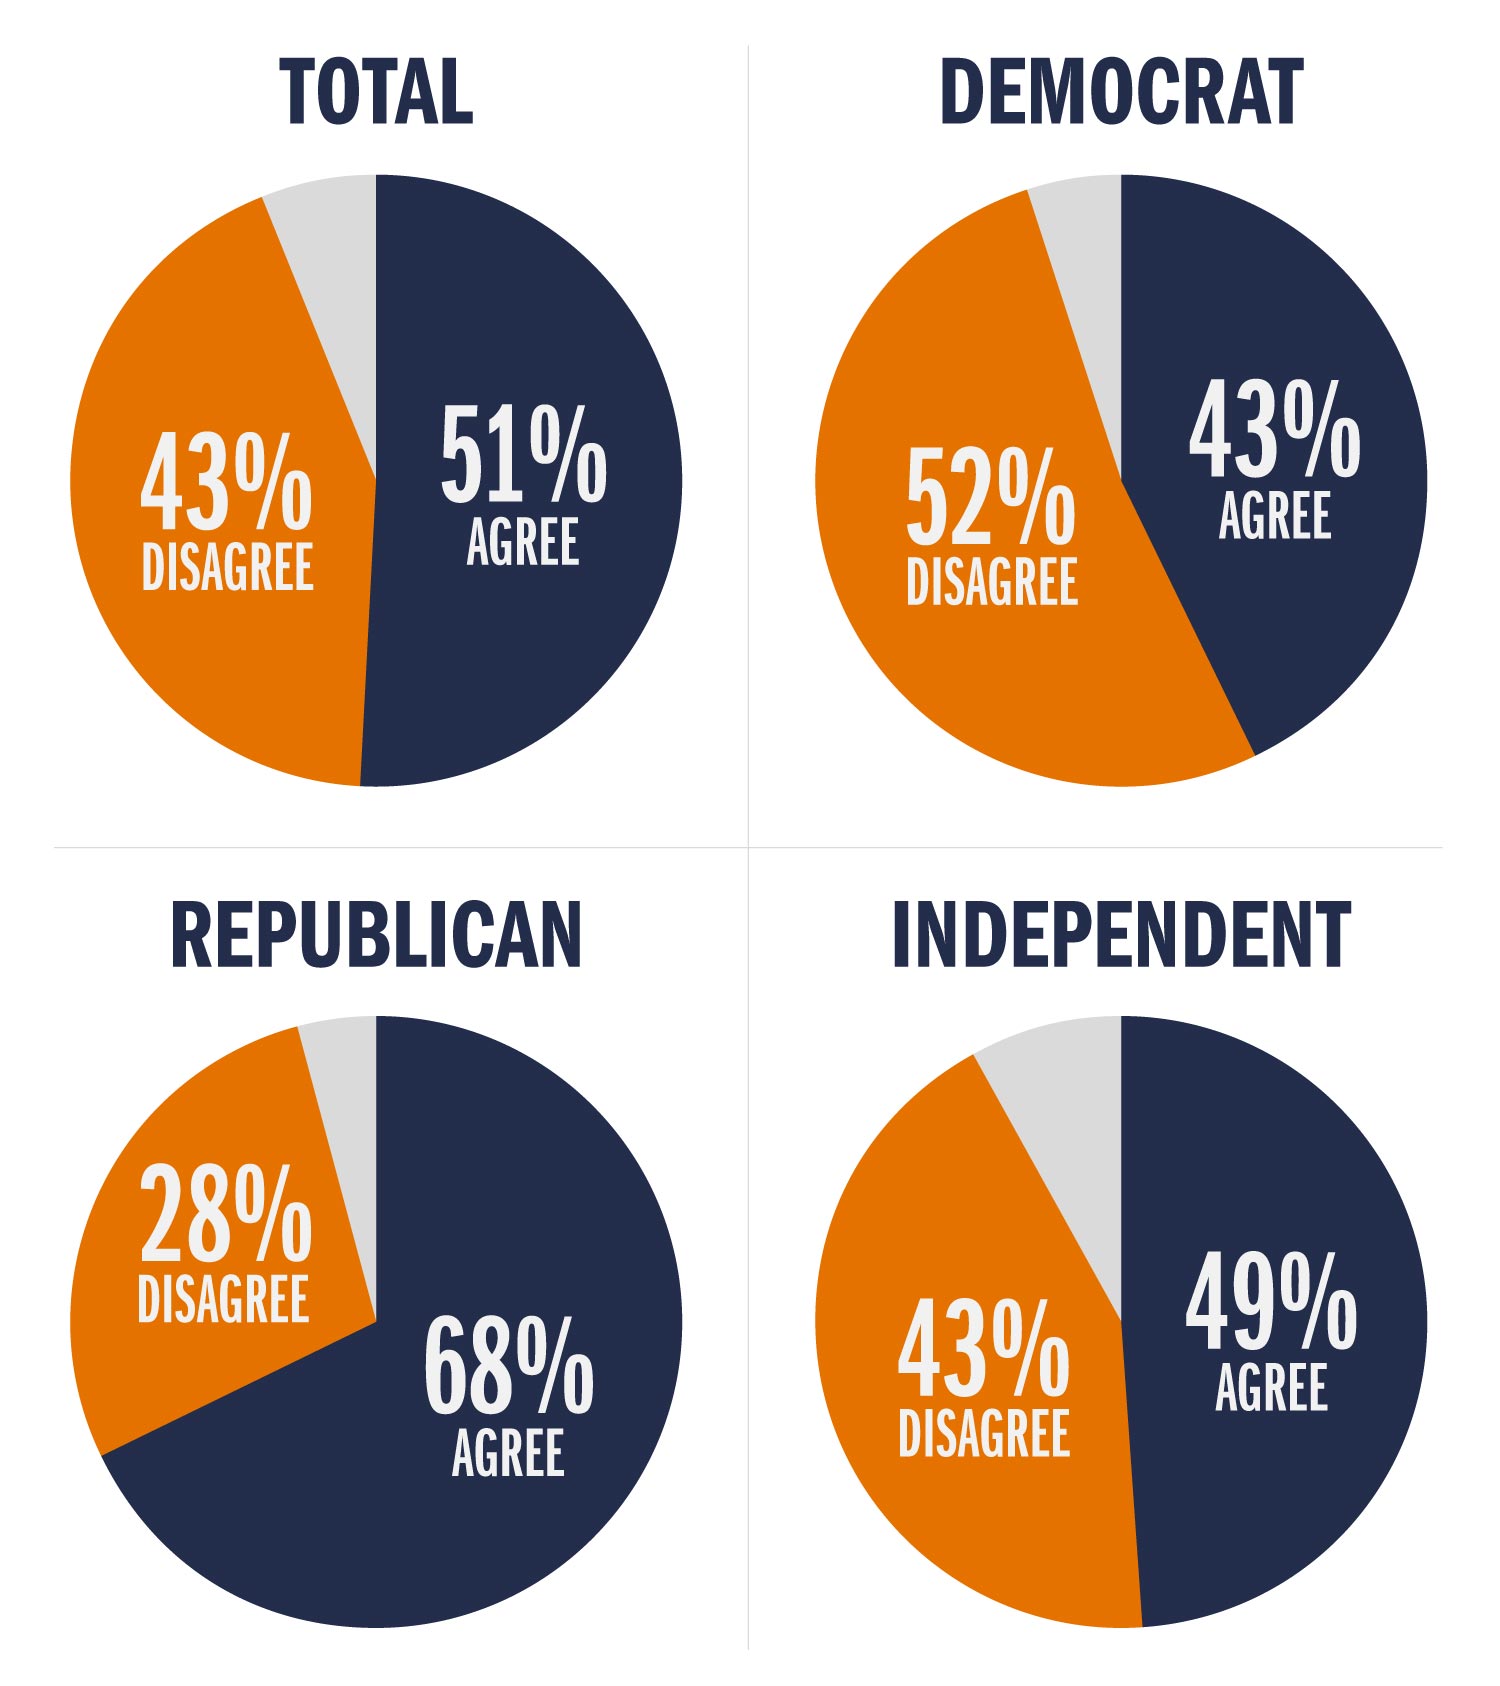 Piecharts orange is disagree blue is agree: Top left: Total 43% disagree 51% agree Top Right:  Democrat 52% disagree and 43% Agree  Bottom left: Republican 28% disagree 68% agree Bottom right: Independent 43% disagree 49% agree